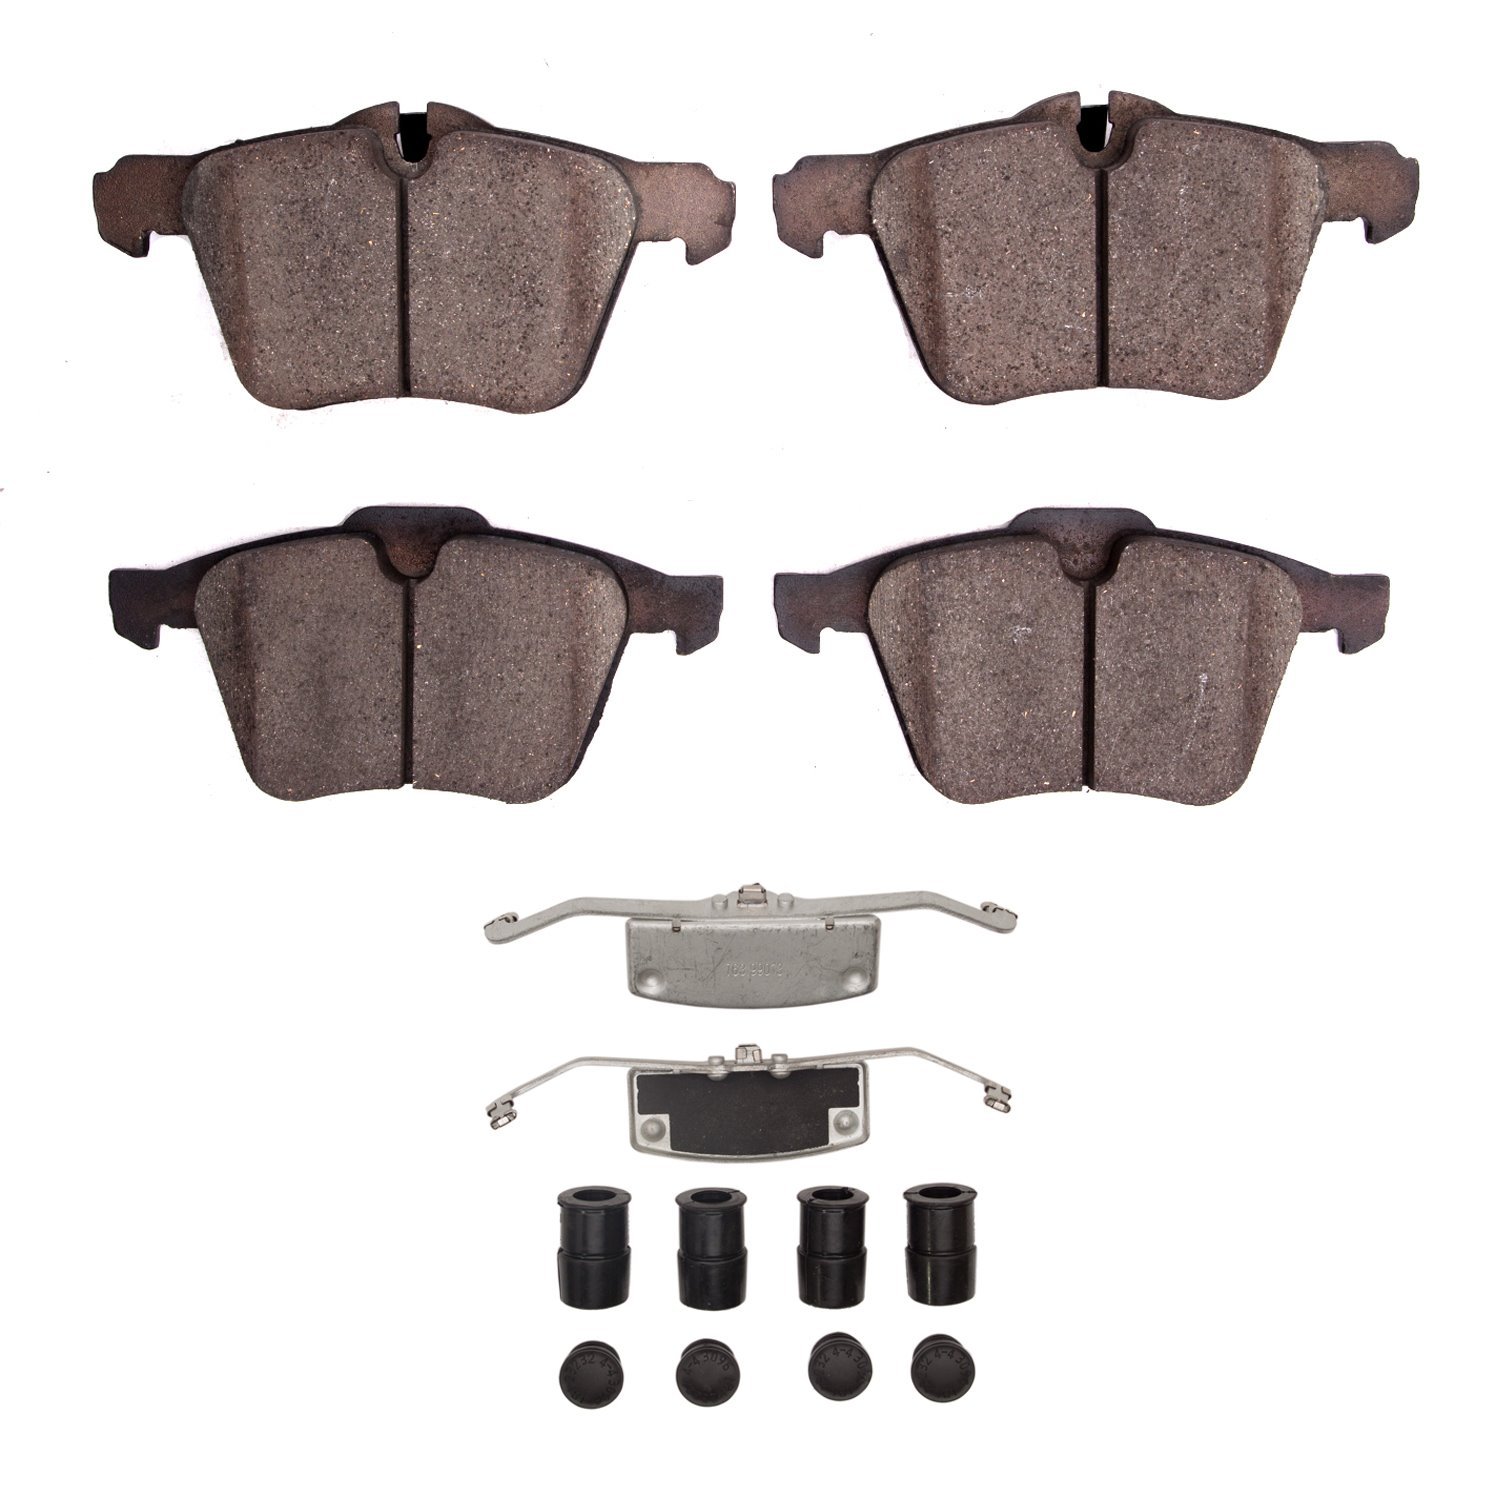 1310-1751-01 3000-Series Ceramic Brake Pads & Hardware Kit, 2013-2021 Jaguar, Position: Front